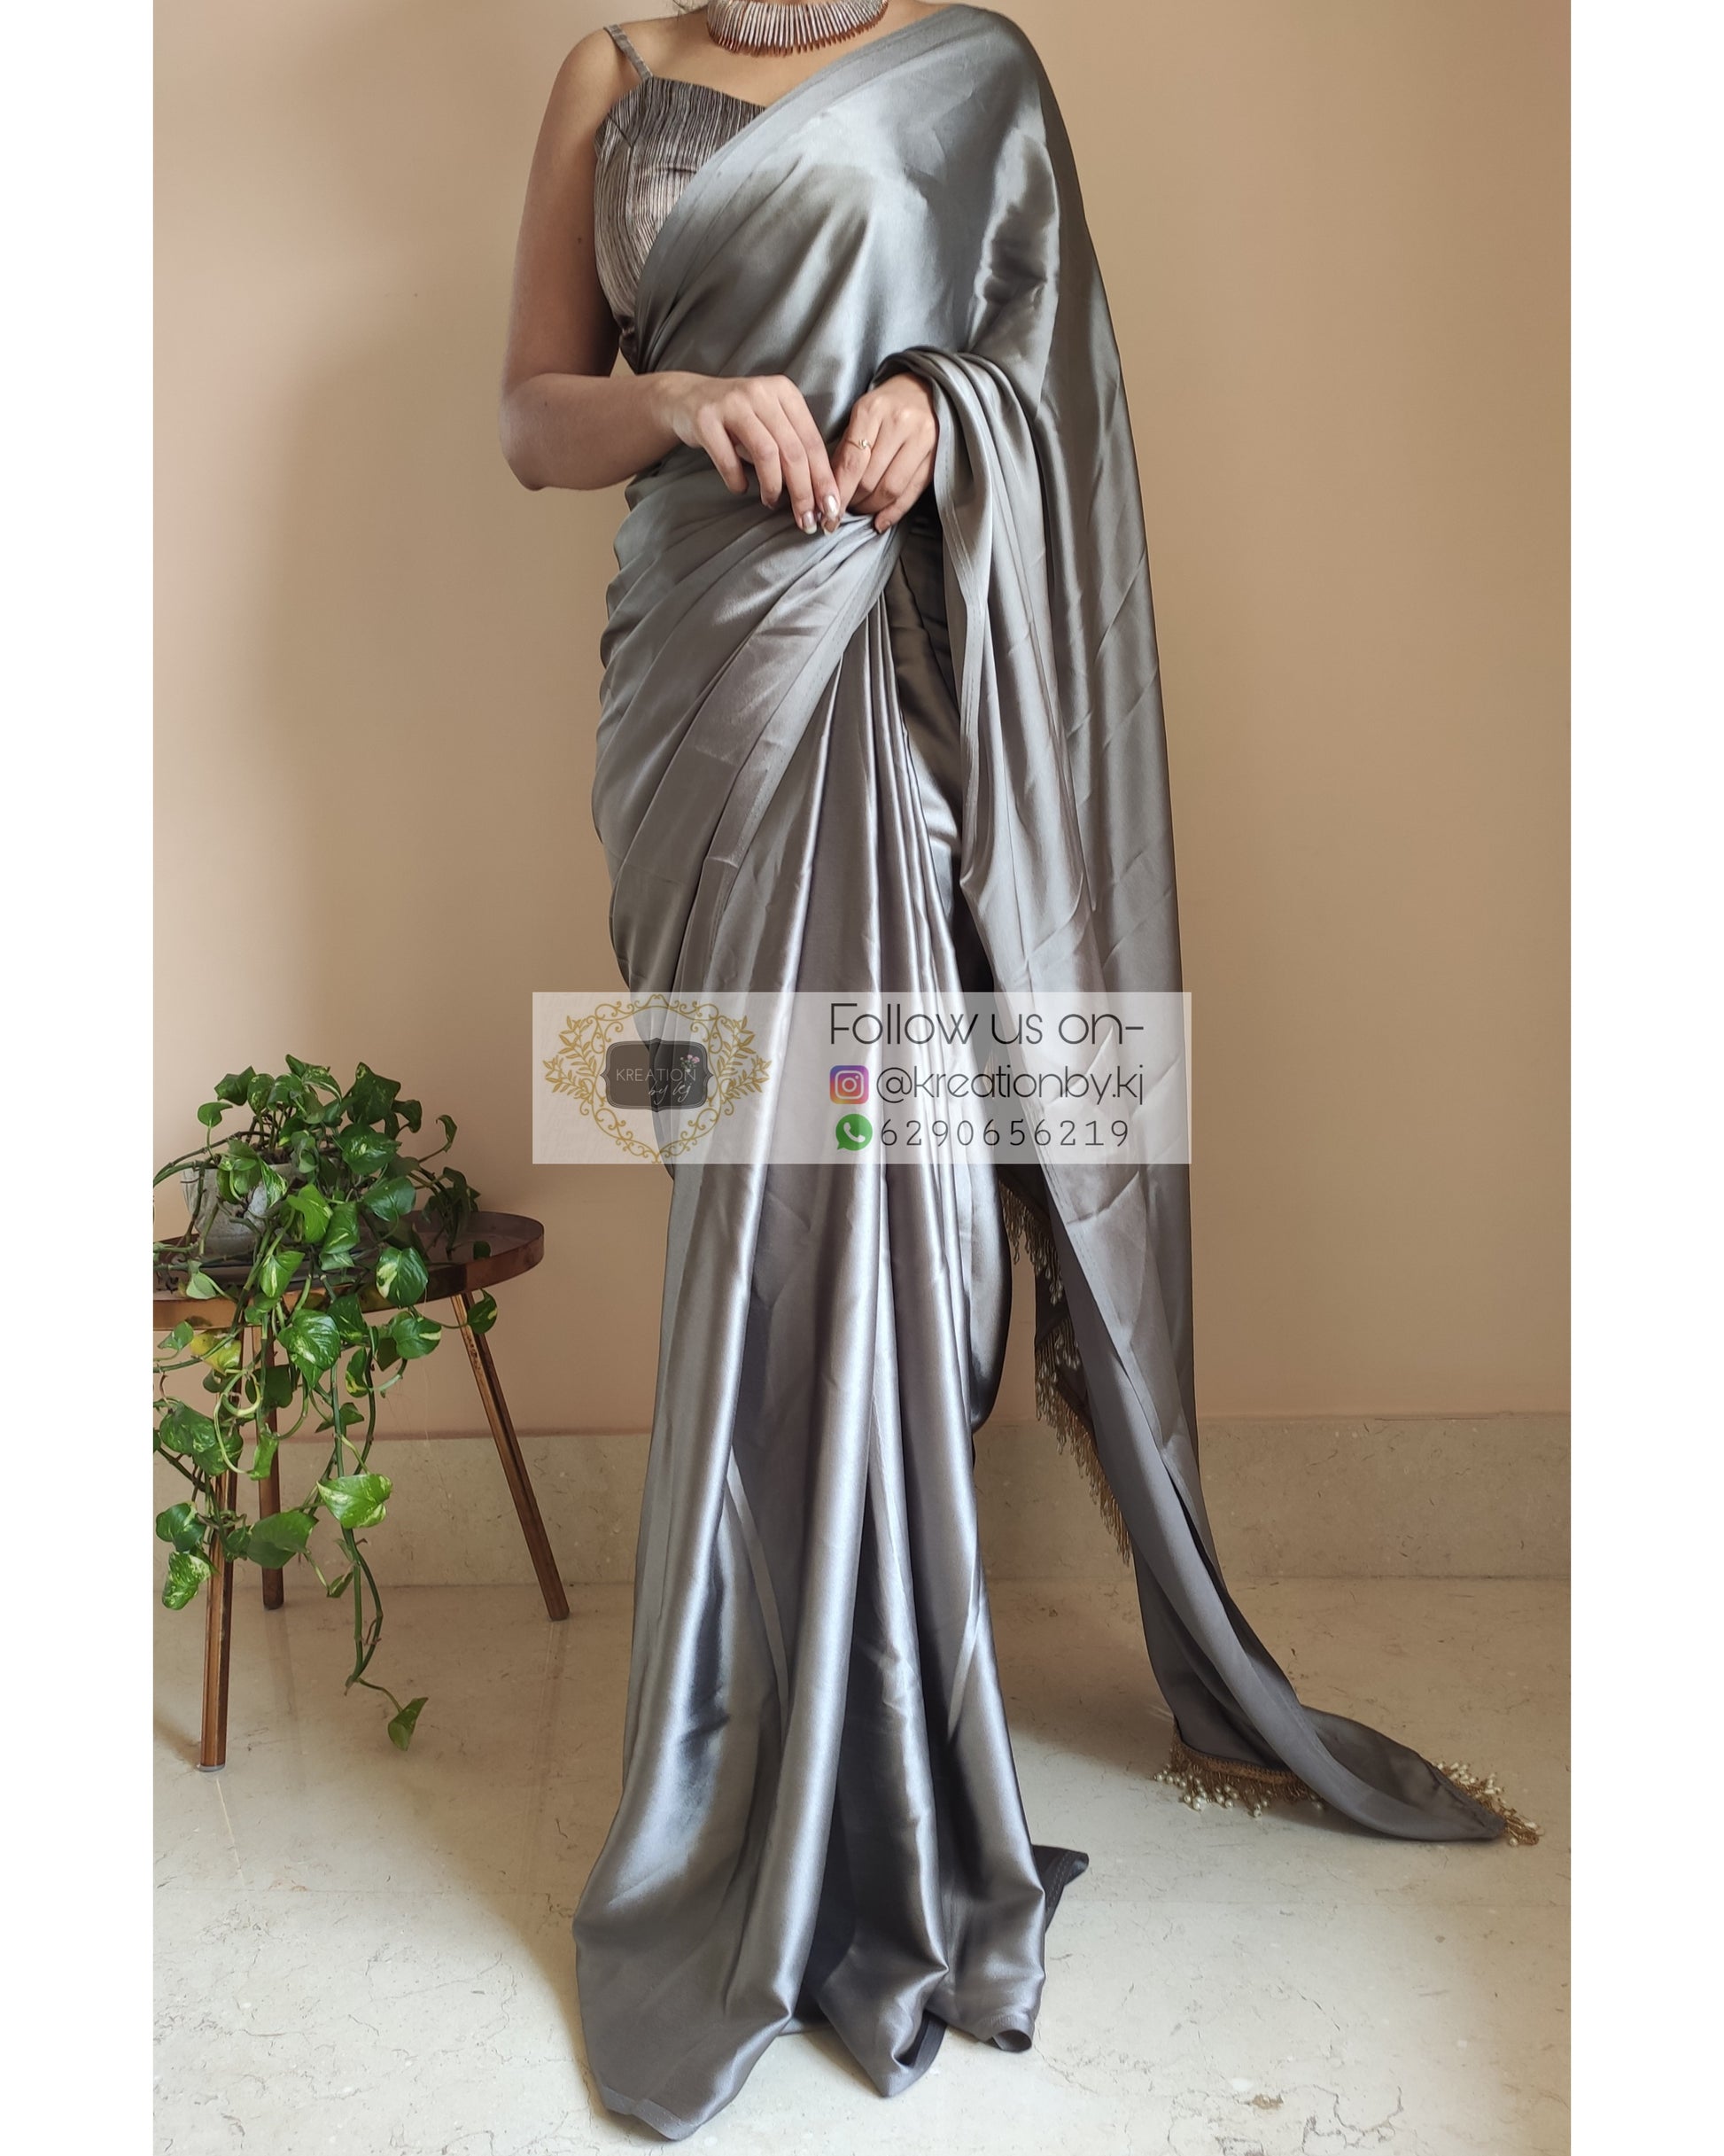 Charcoal Gray Satin Silk Saree With Handmade Tassels On Pallu - kreationbykj